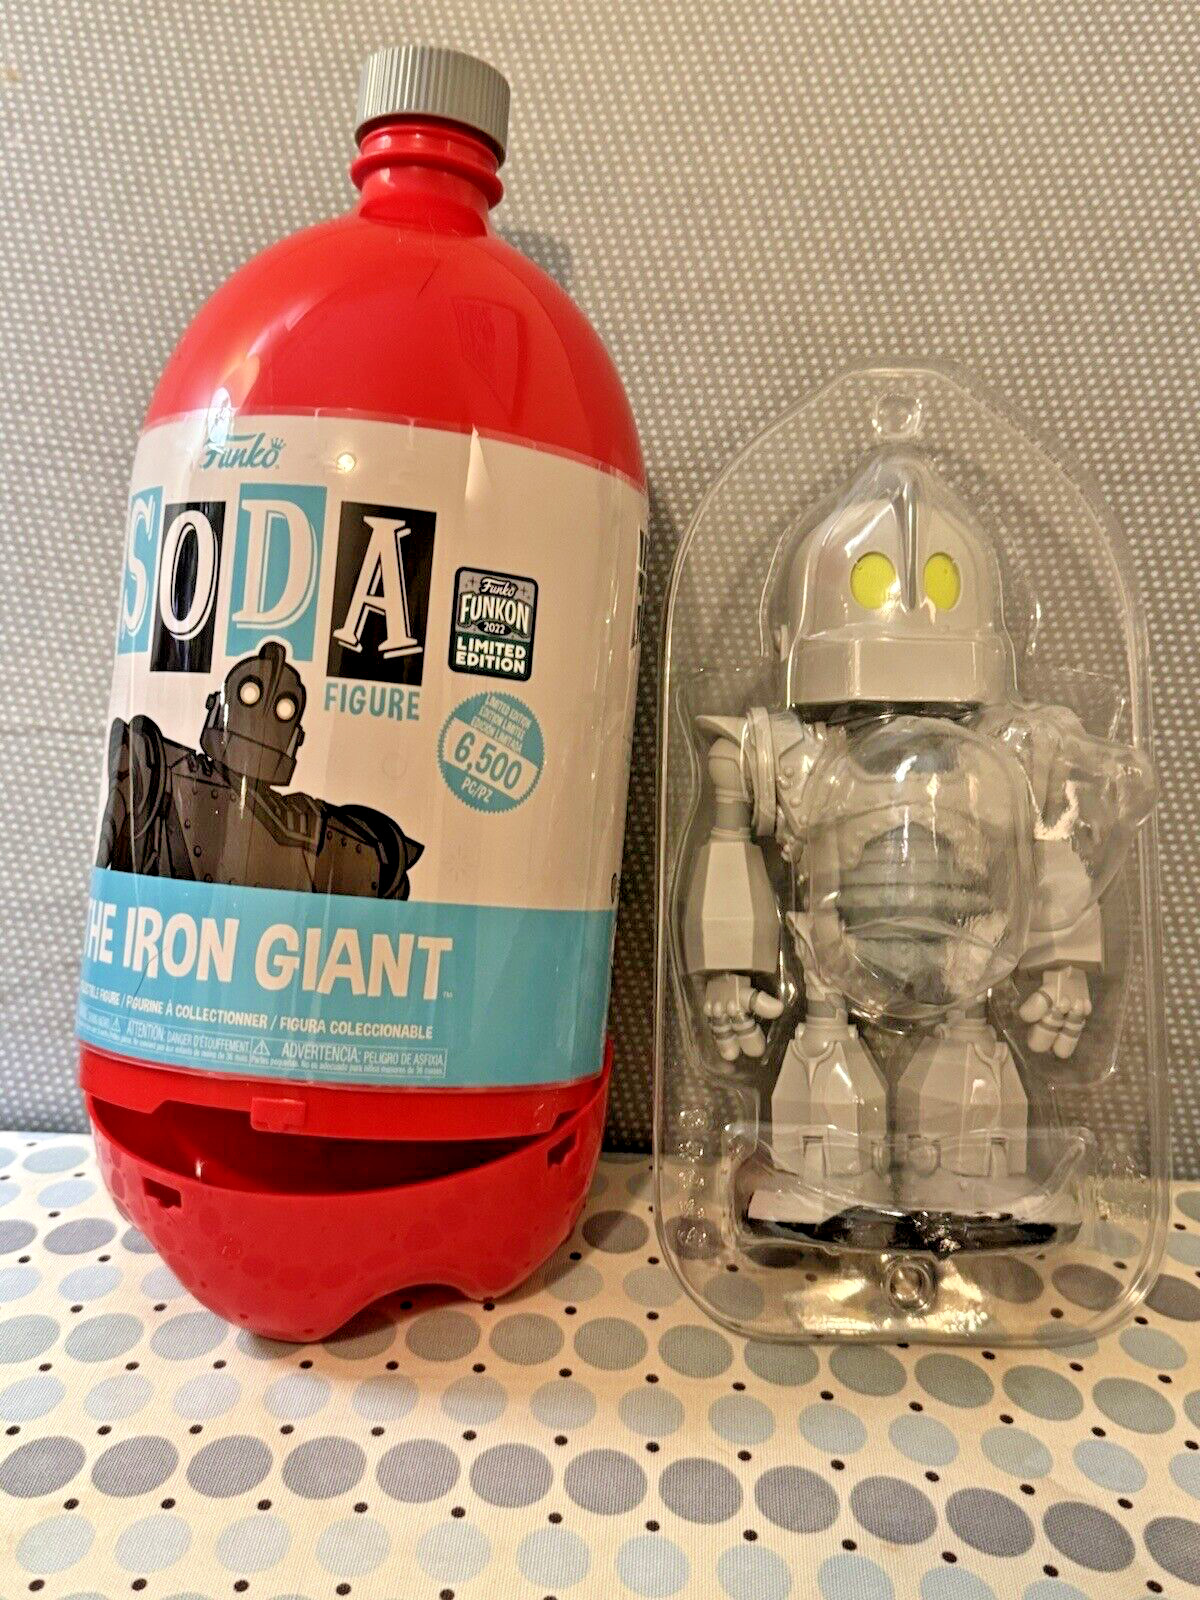 Funko 3 Liter Soda The Iron Giant COMMON Funkon Exclusive LE 6500